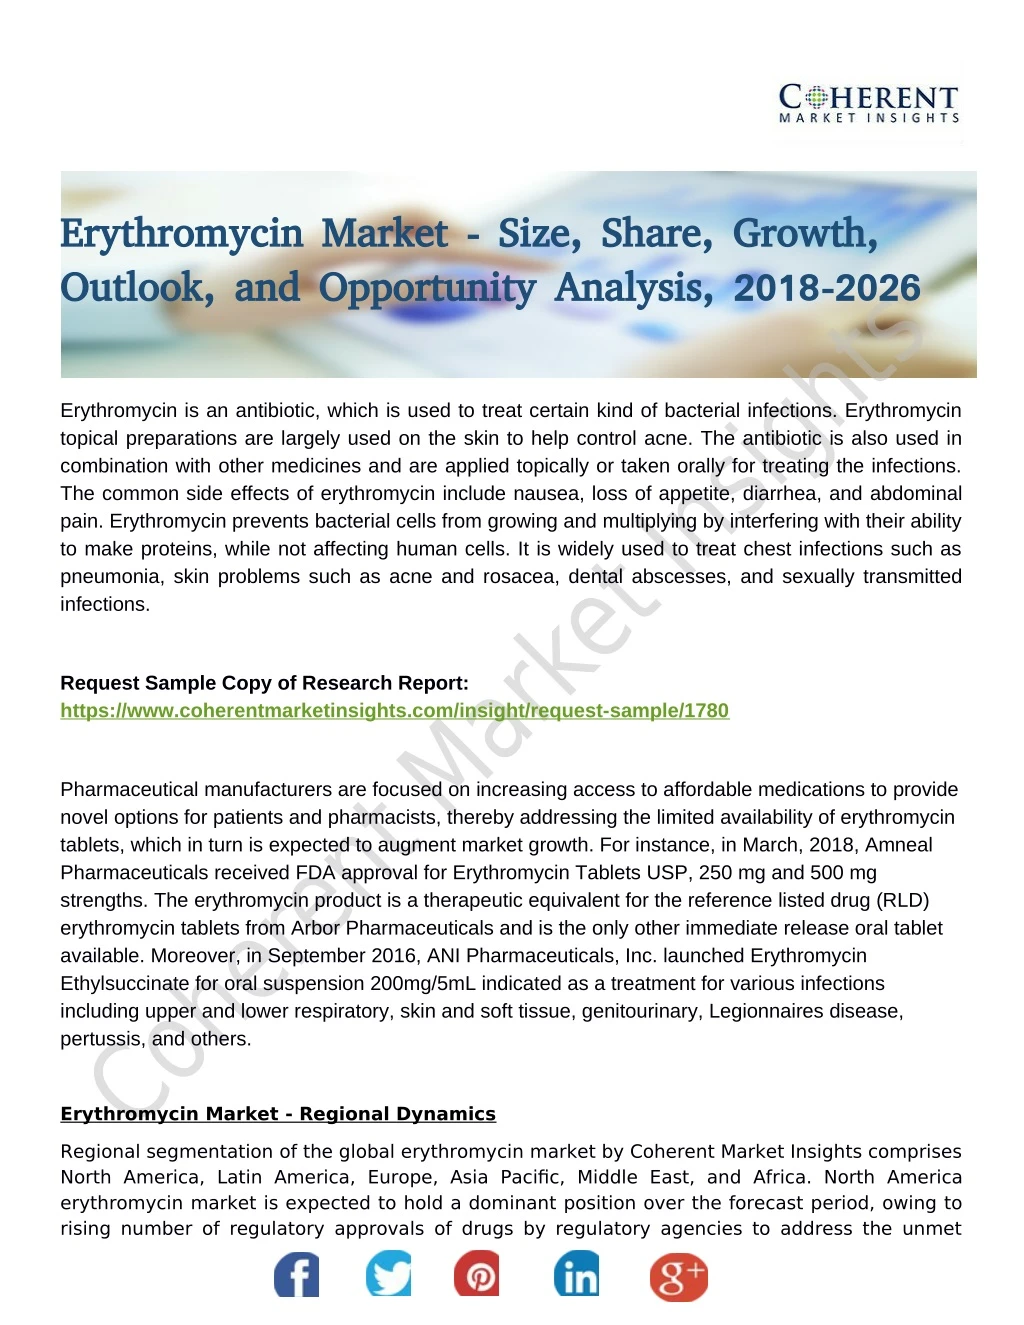 erythromycin market size share growth